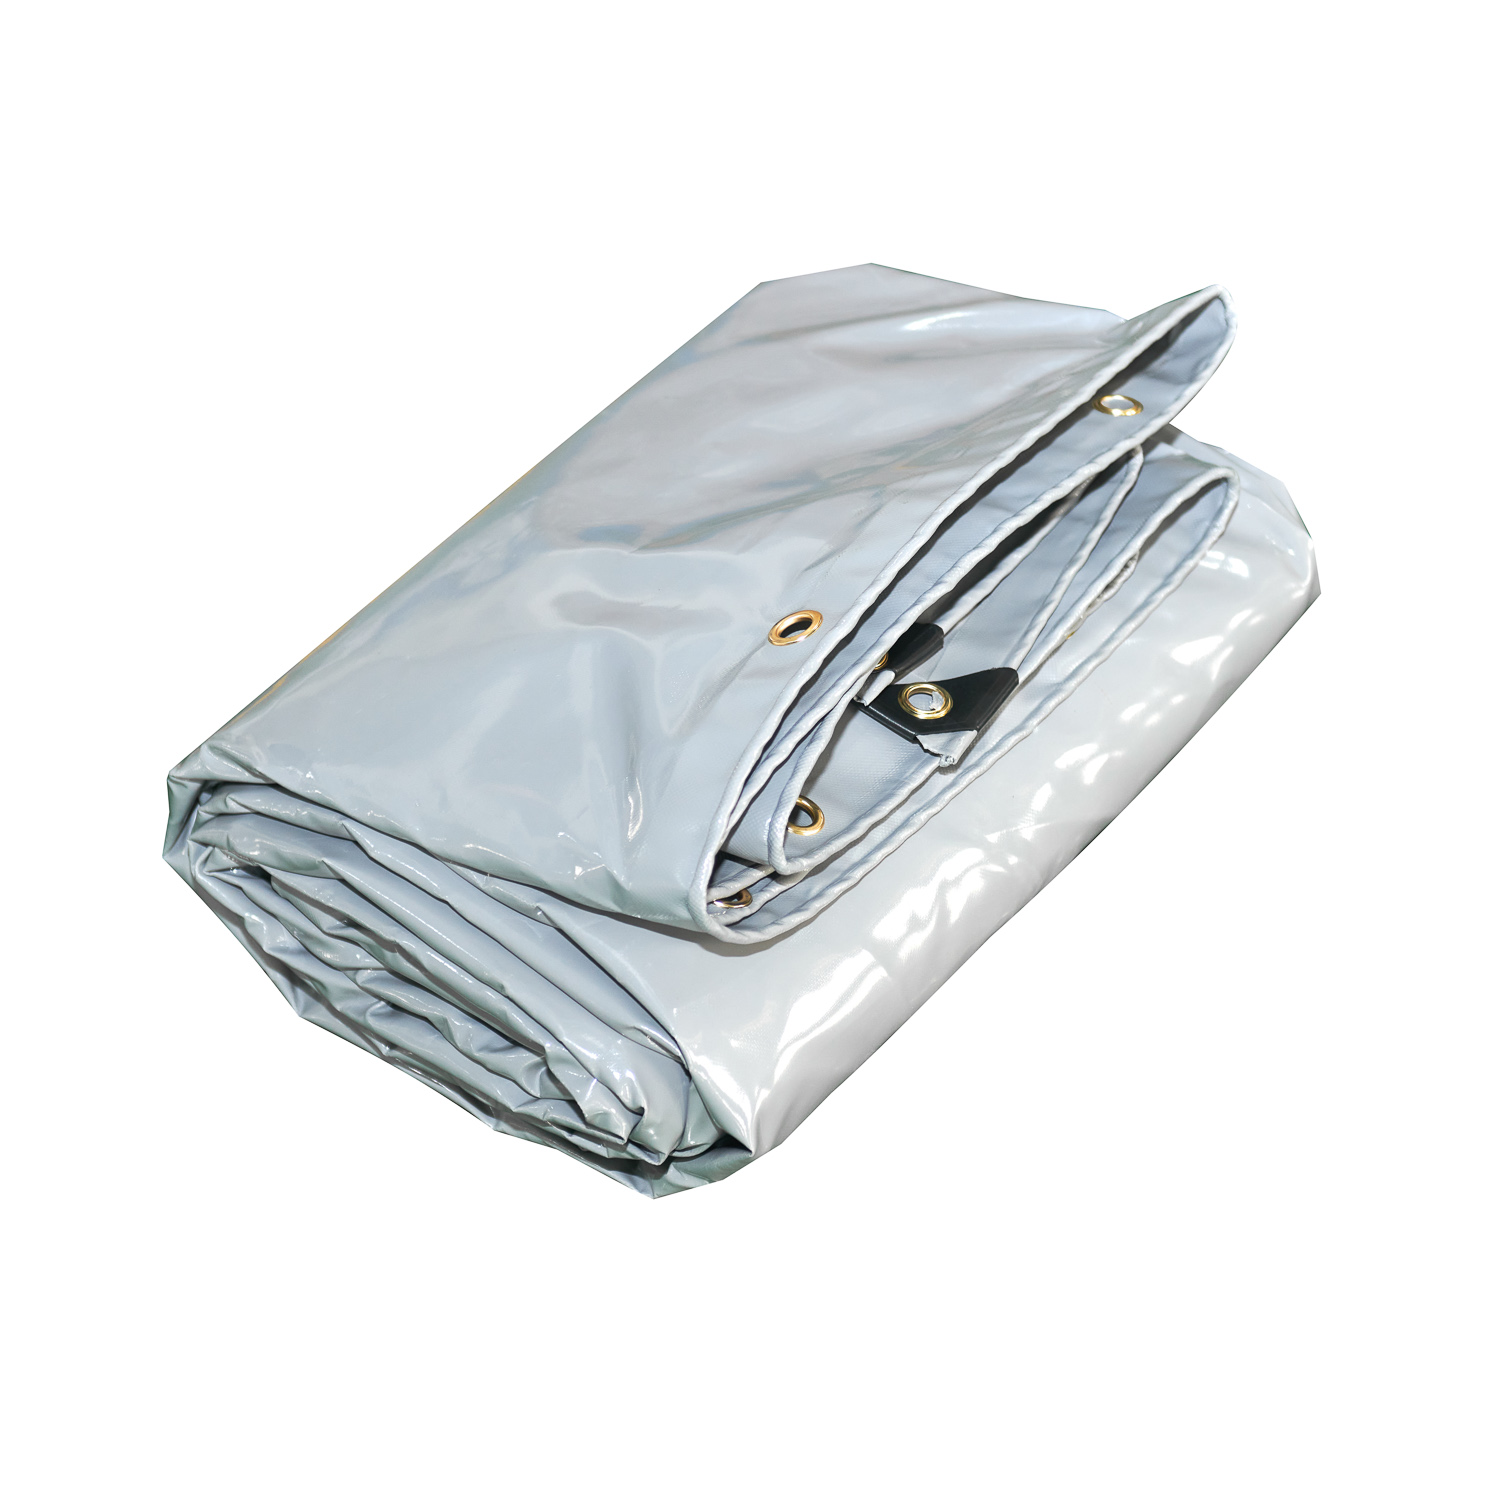 China PVC coated tarpaulin for Truck Side Truck Cover PVC Tarpaulin